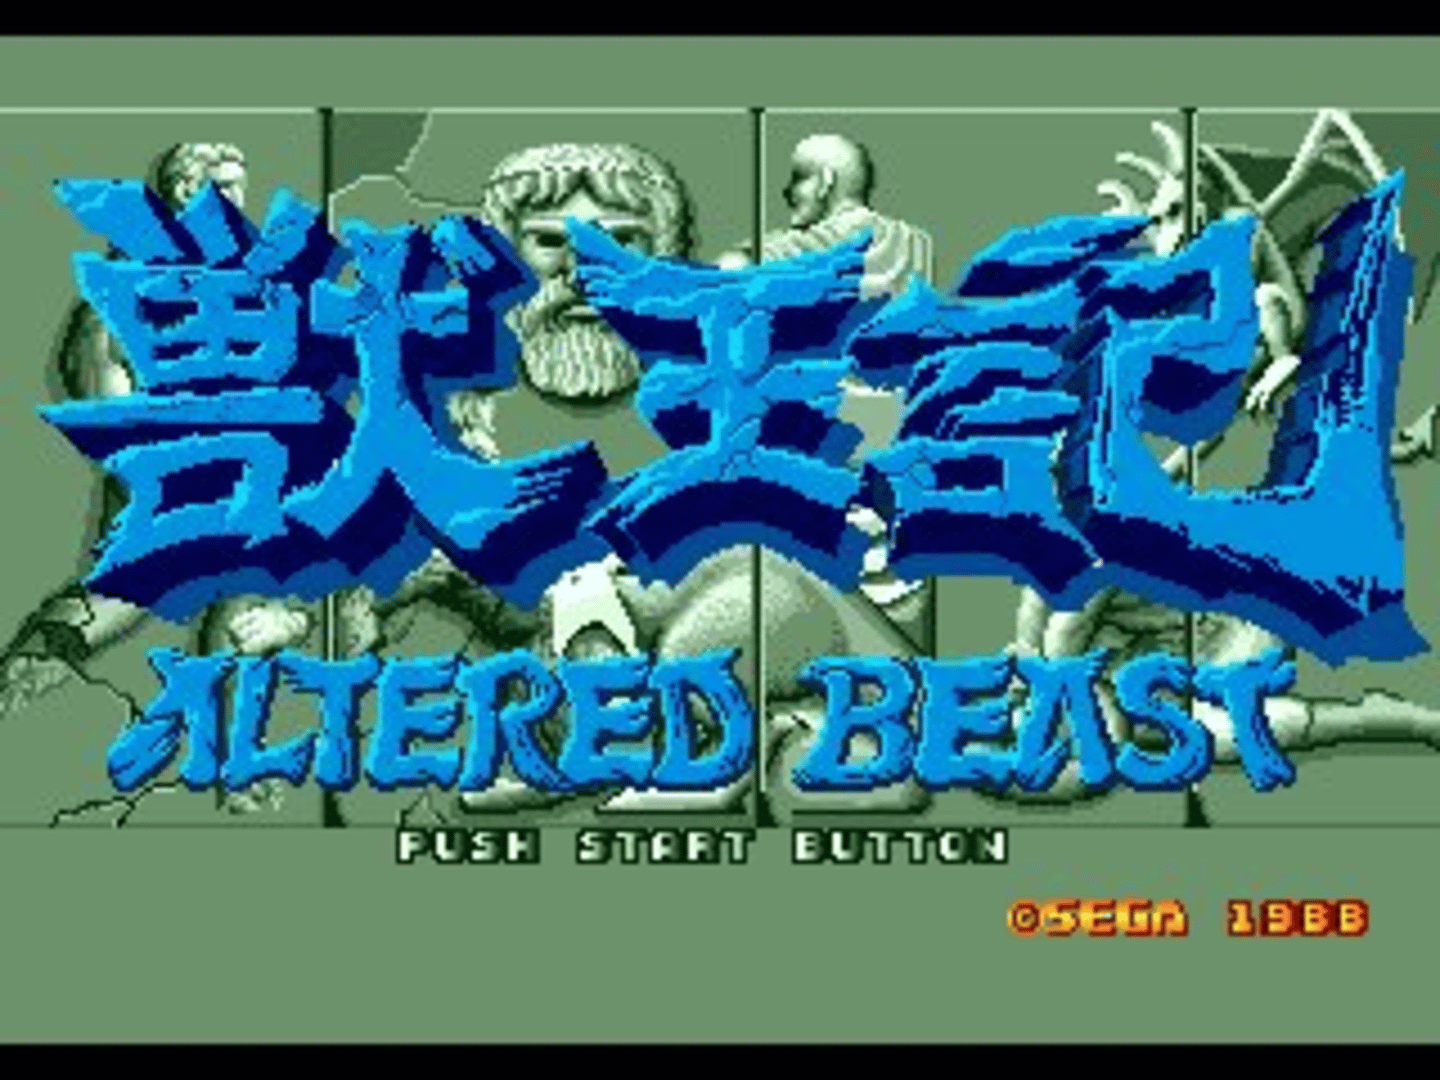 Altered Beast screenshot